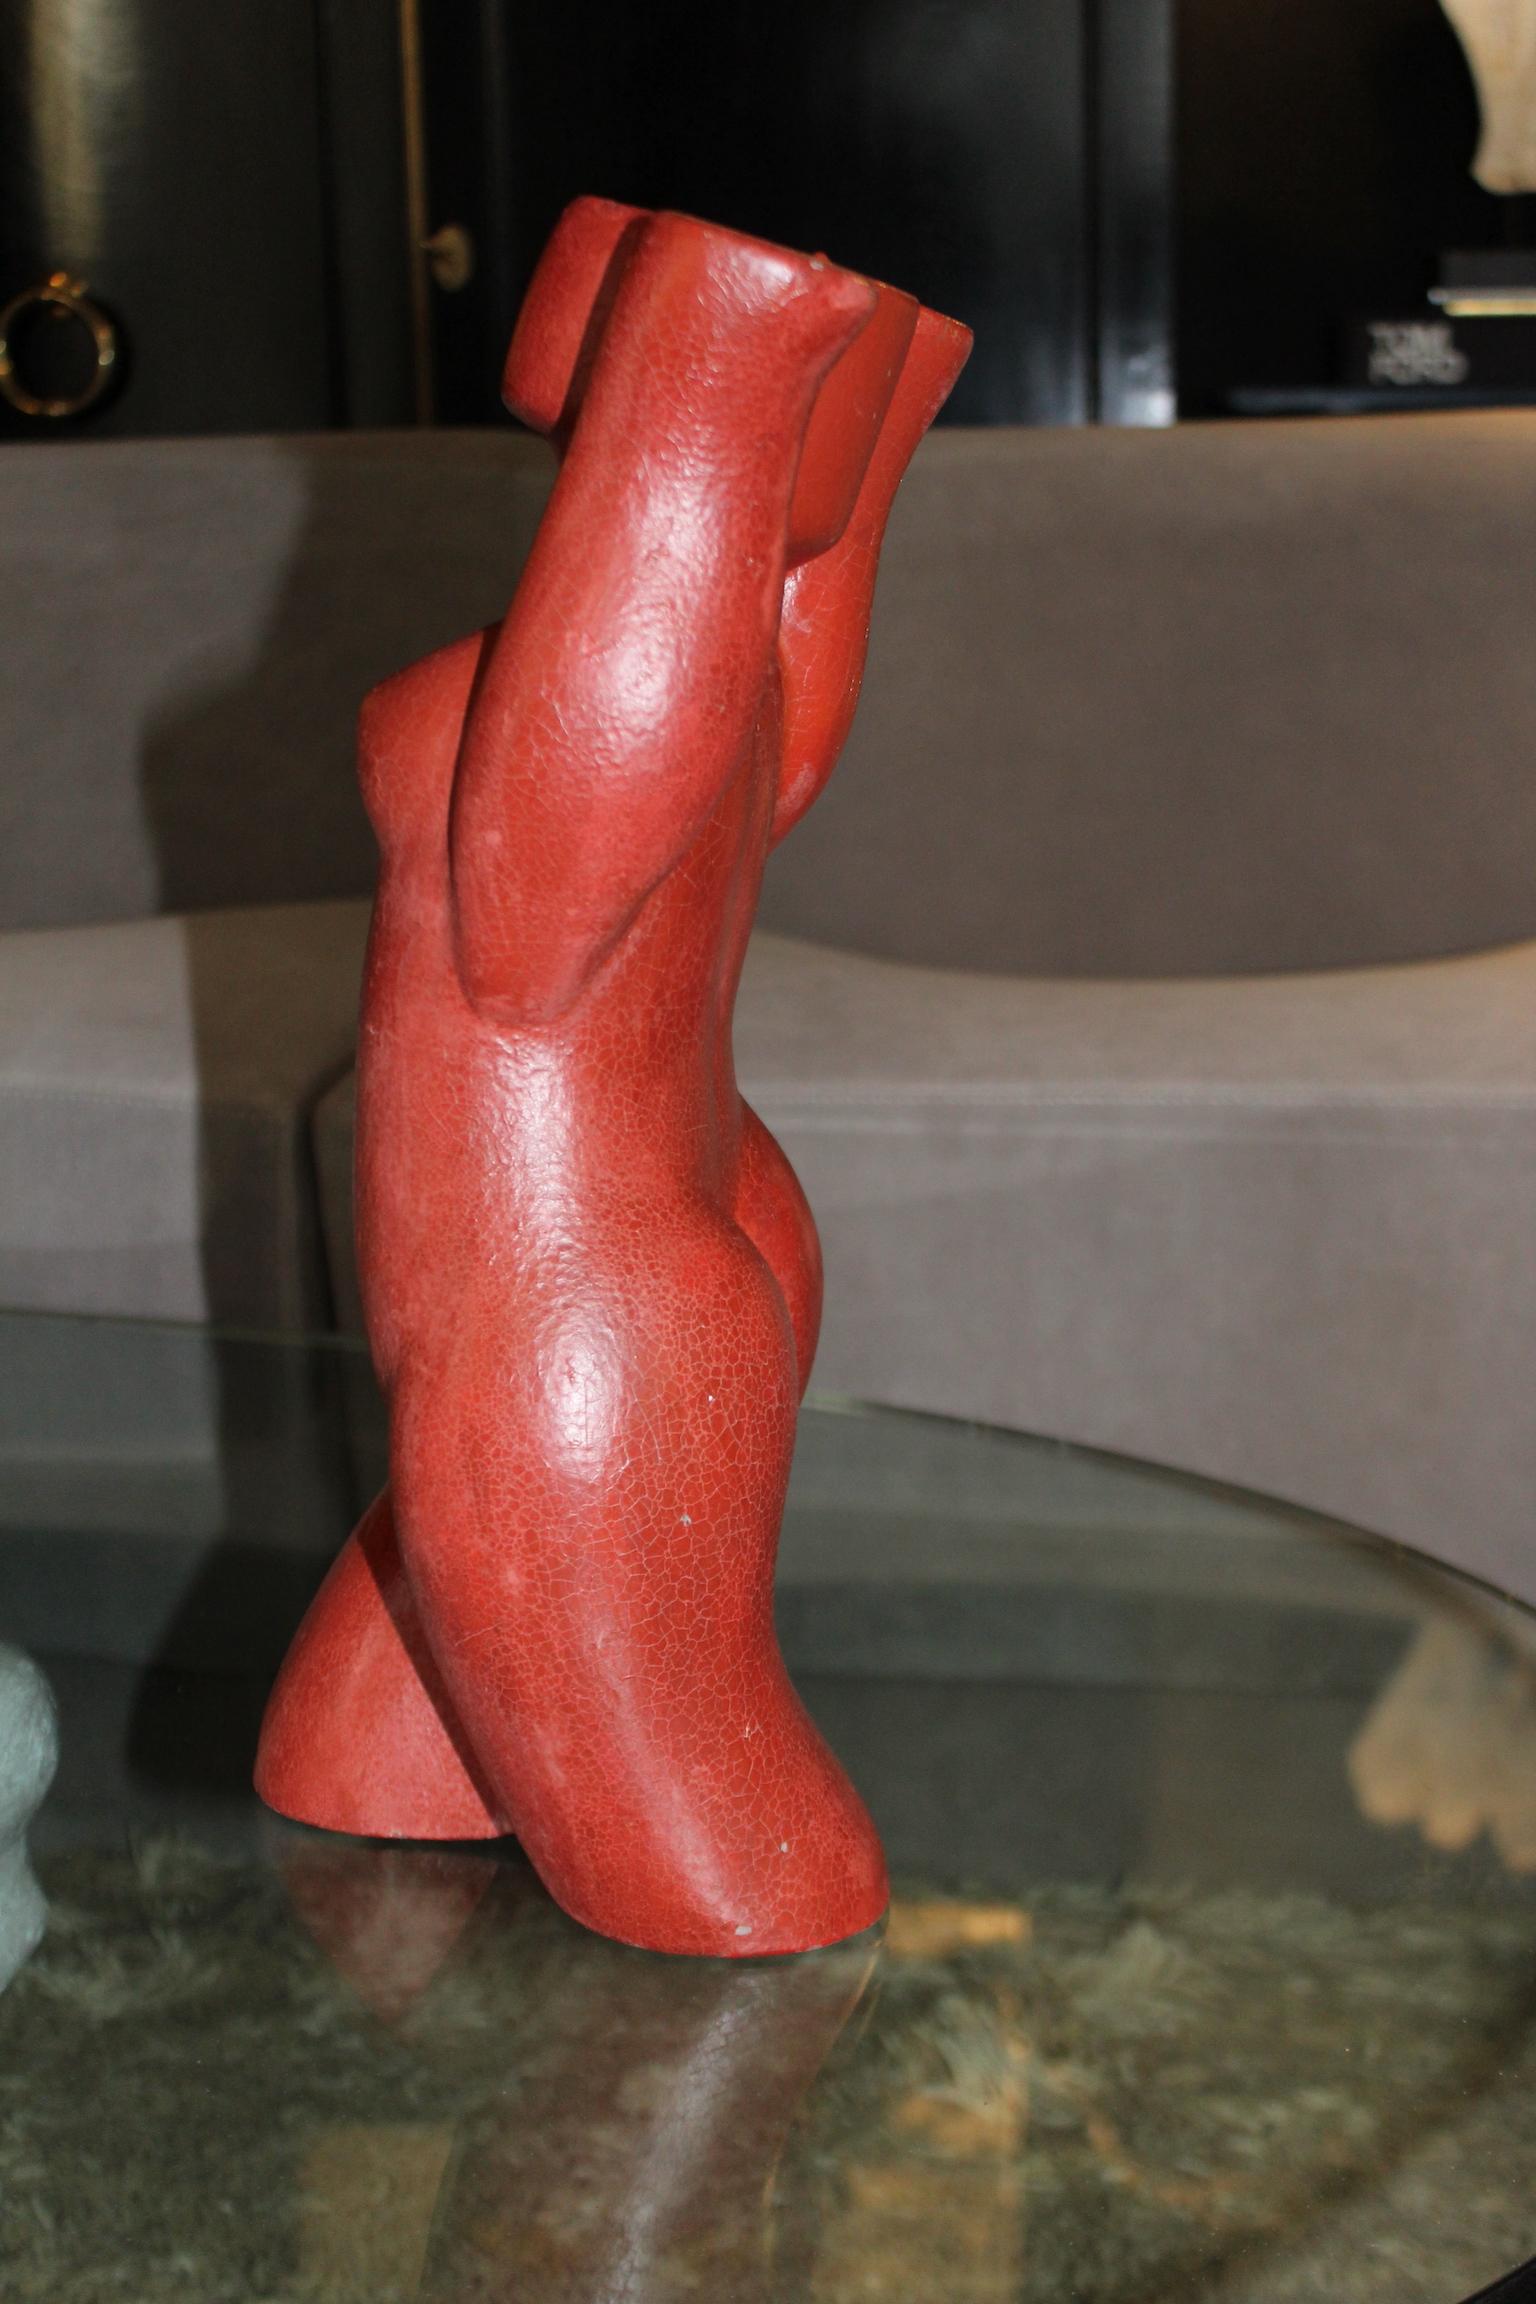 Futuristic sculpture figure of a woman in red 1950s style in ceramic.